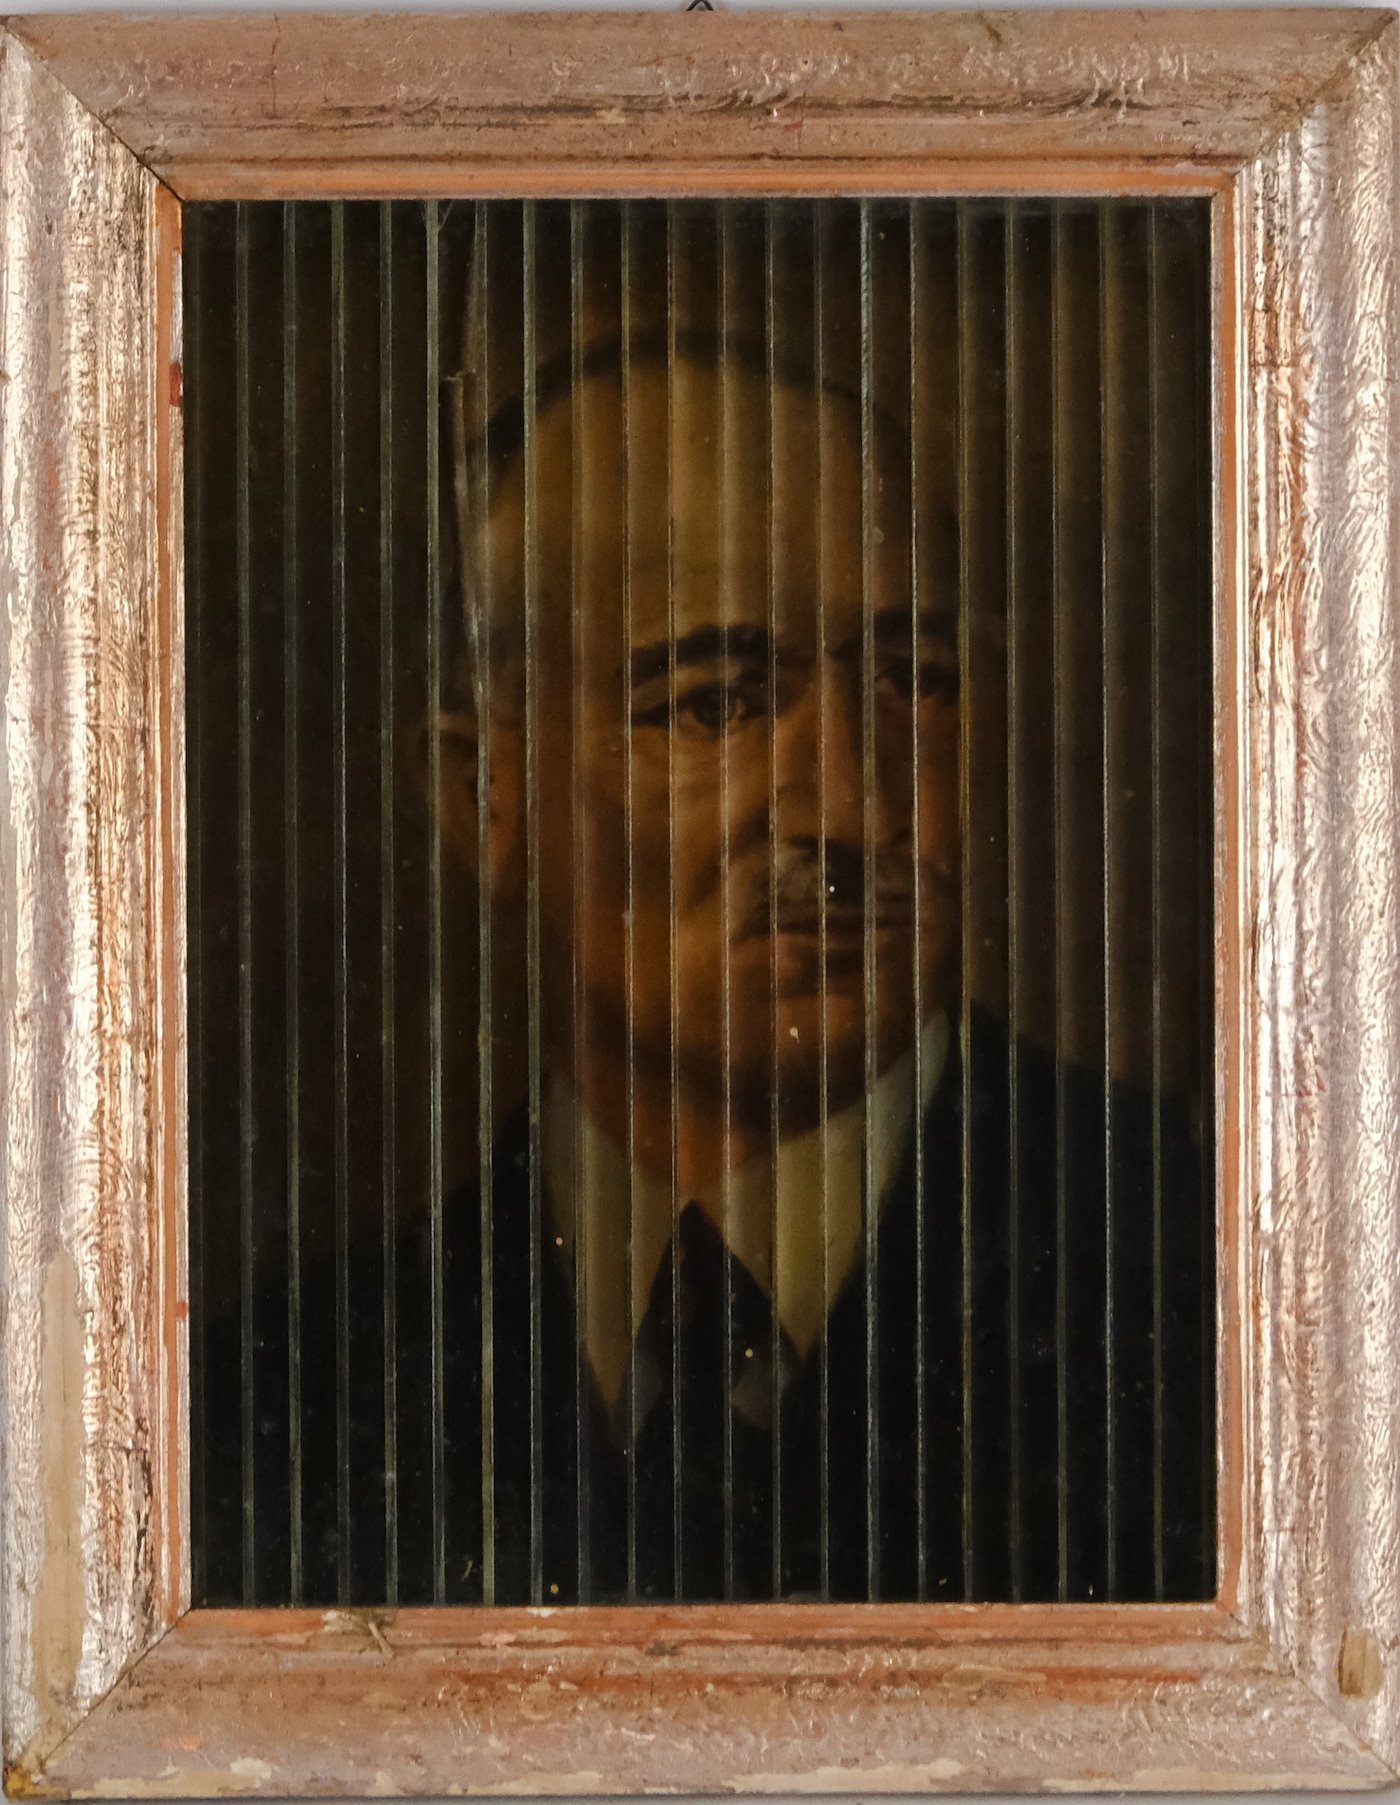 Neznámý autor - Edvard Beneš, T.G. Masaryk, J. V. Stalin